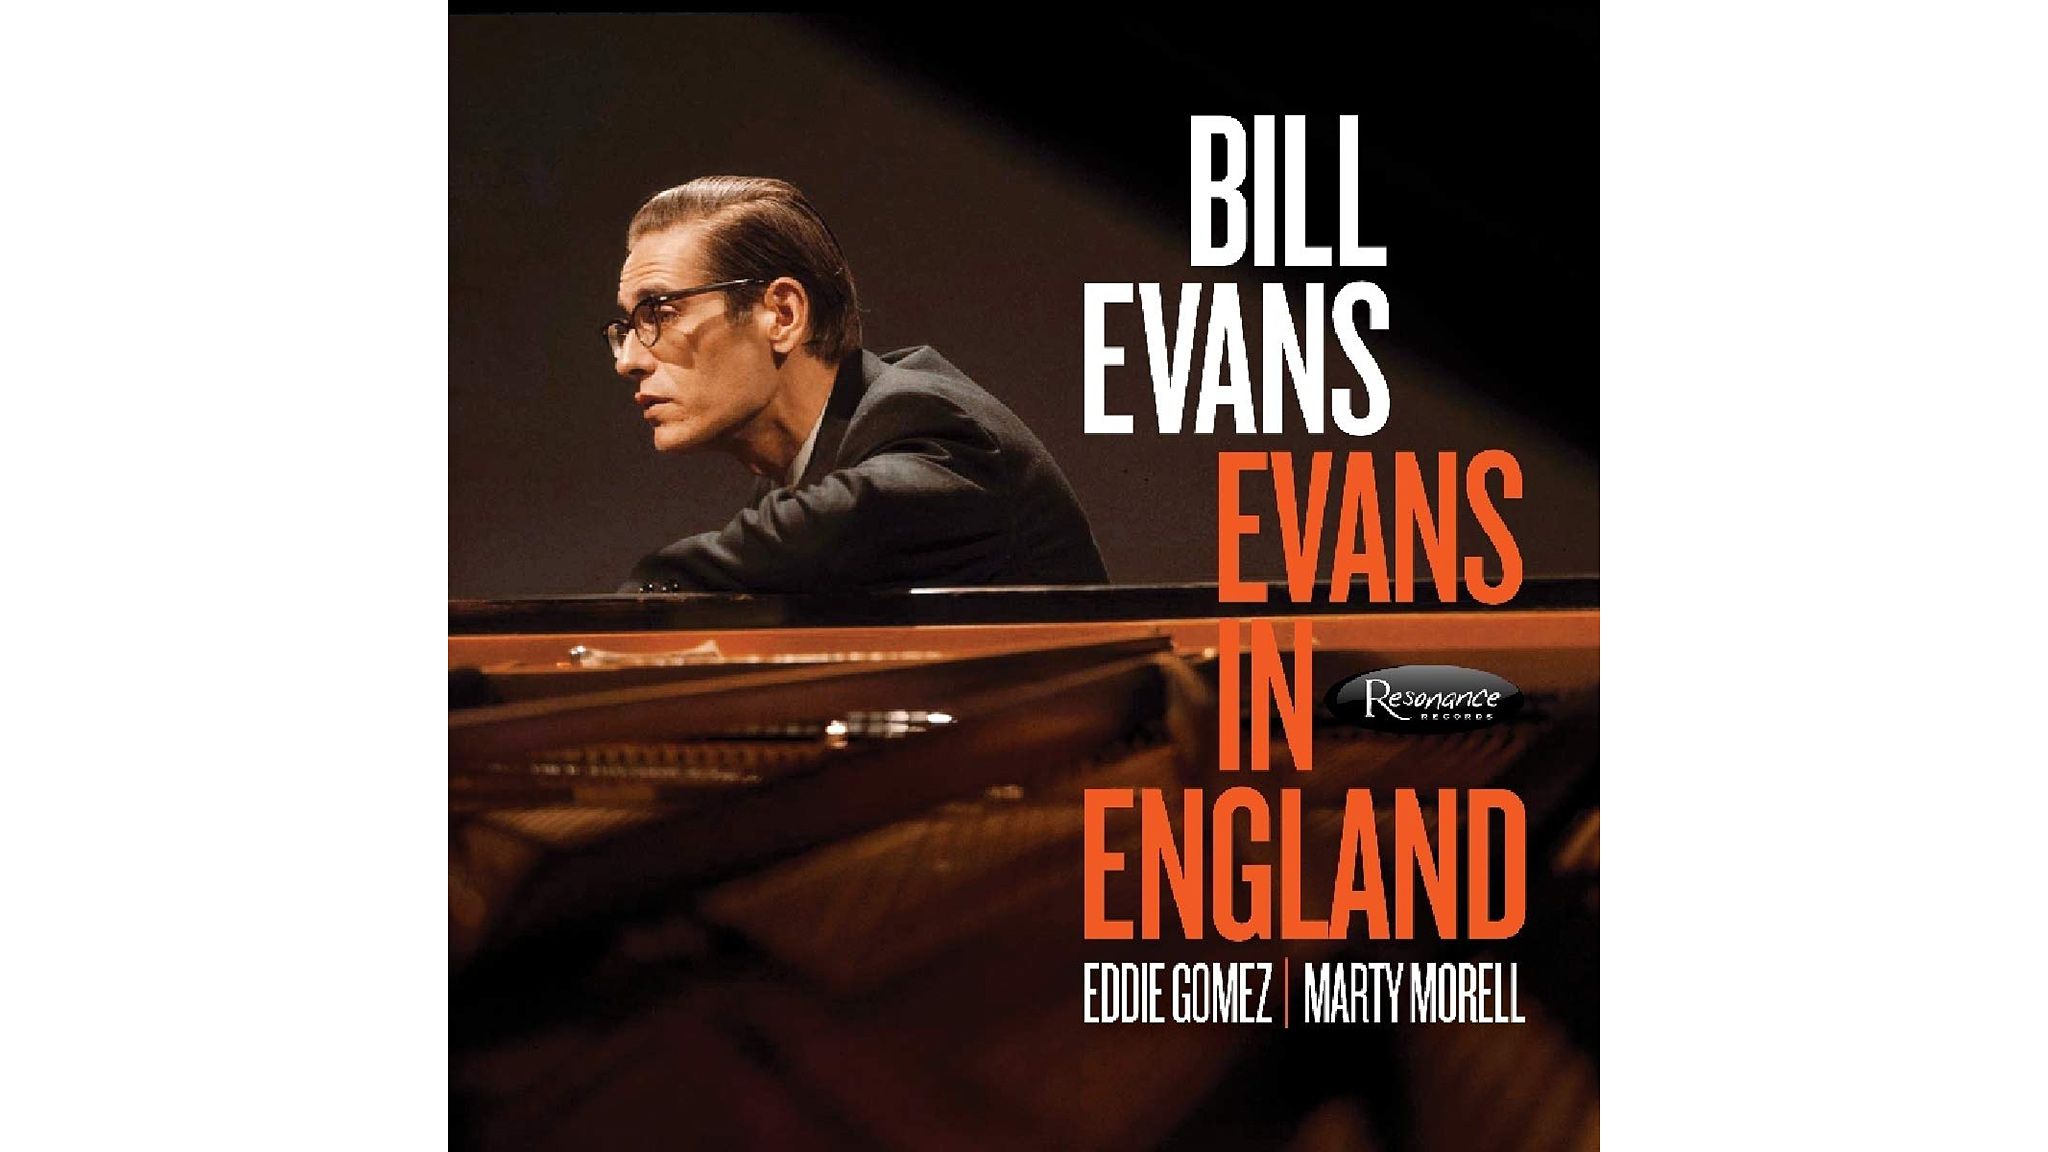 Bill Evans: Evans in England